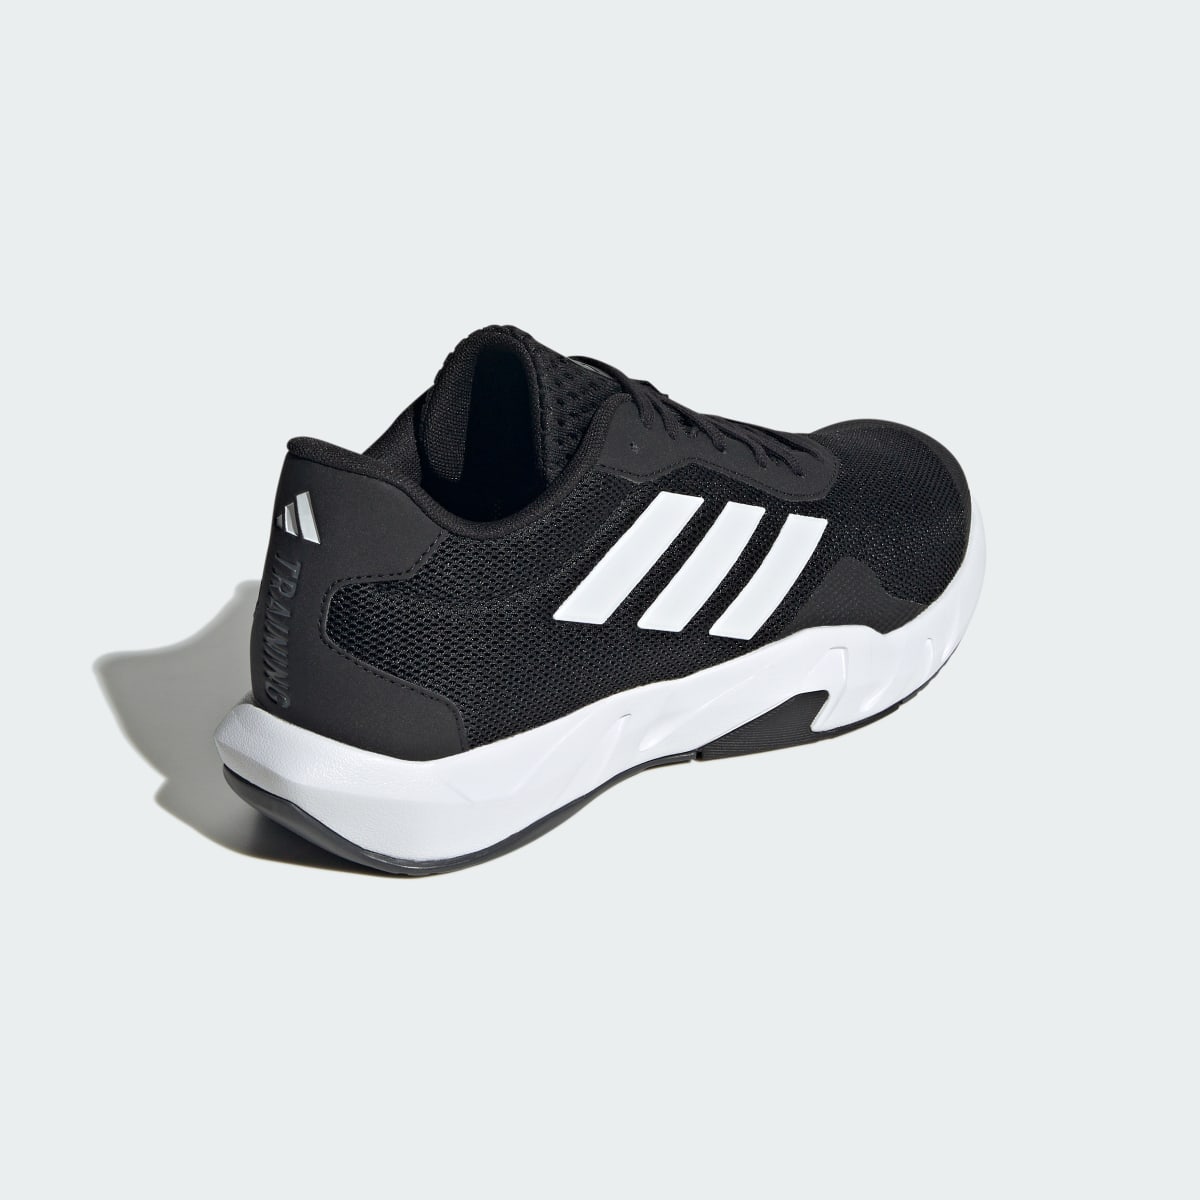 Adidas Amplimove Training Shoes. 6